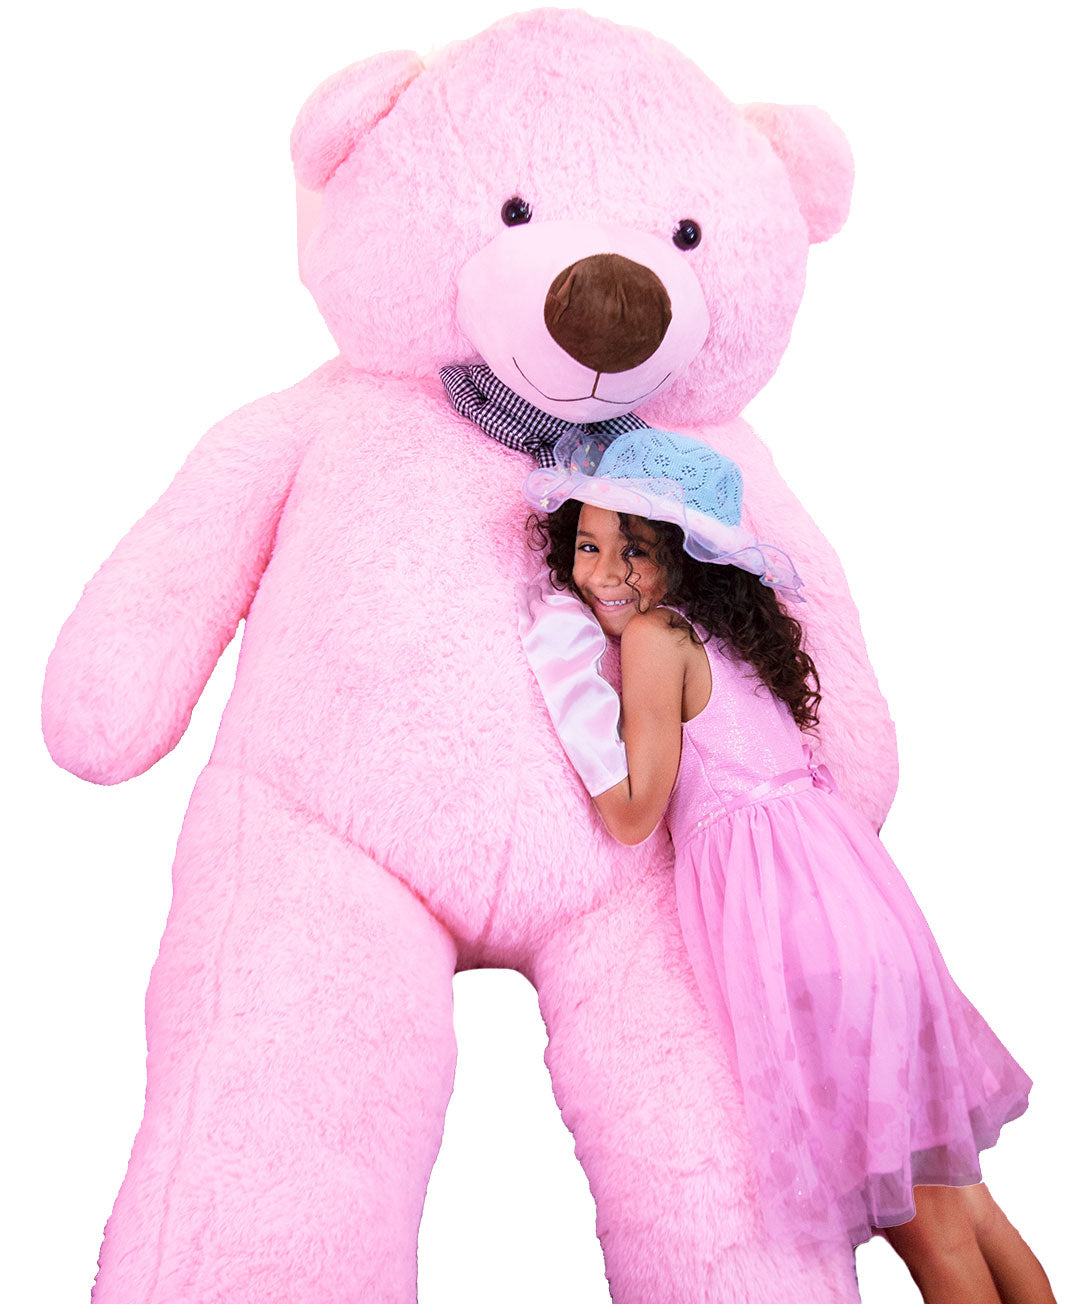 life sized pink teddy bear